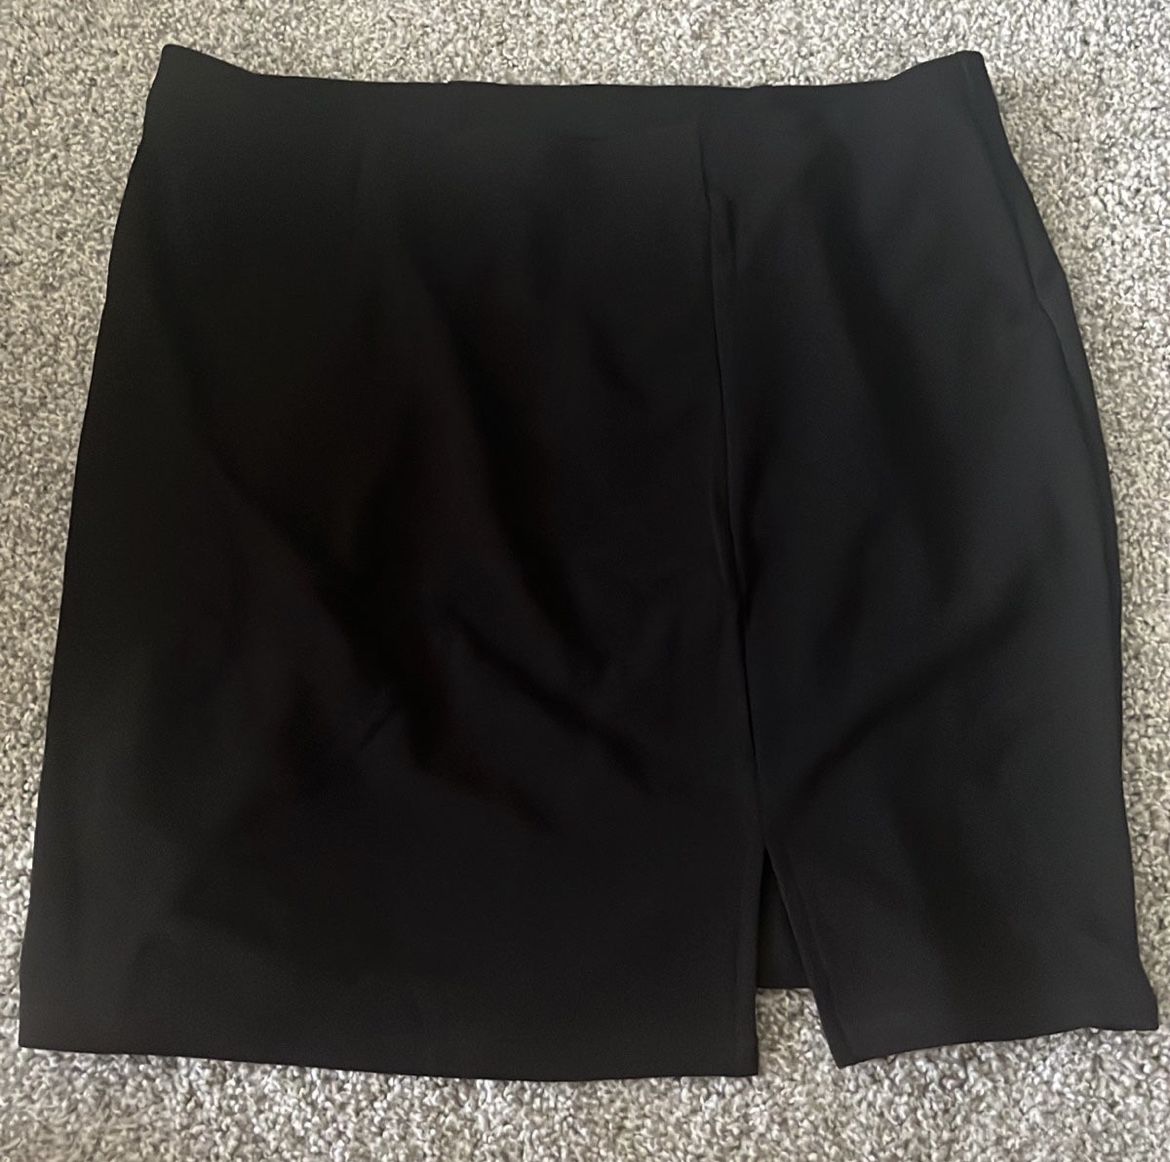 Black Pencil Skirt Juniors XL (15-17)